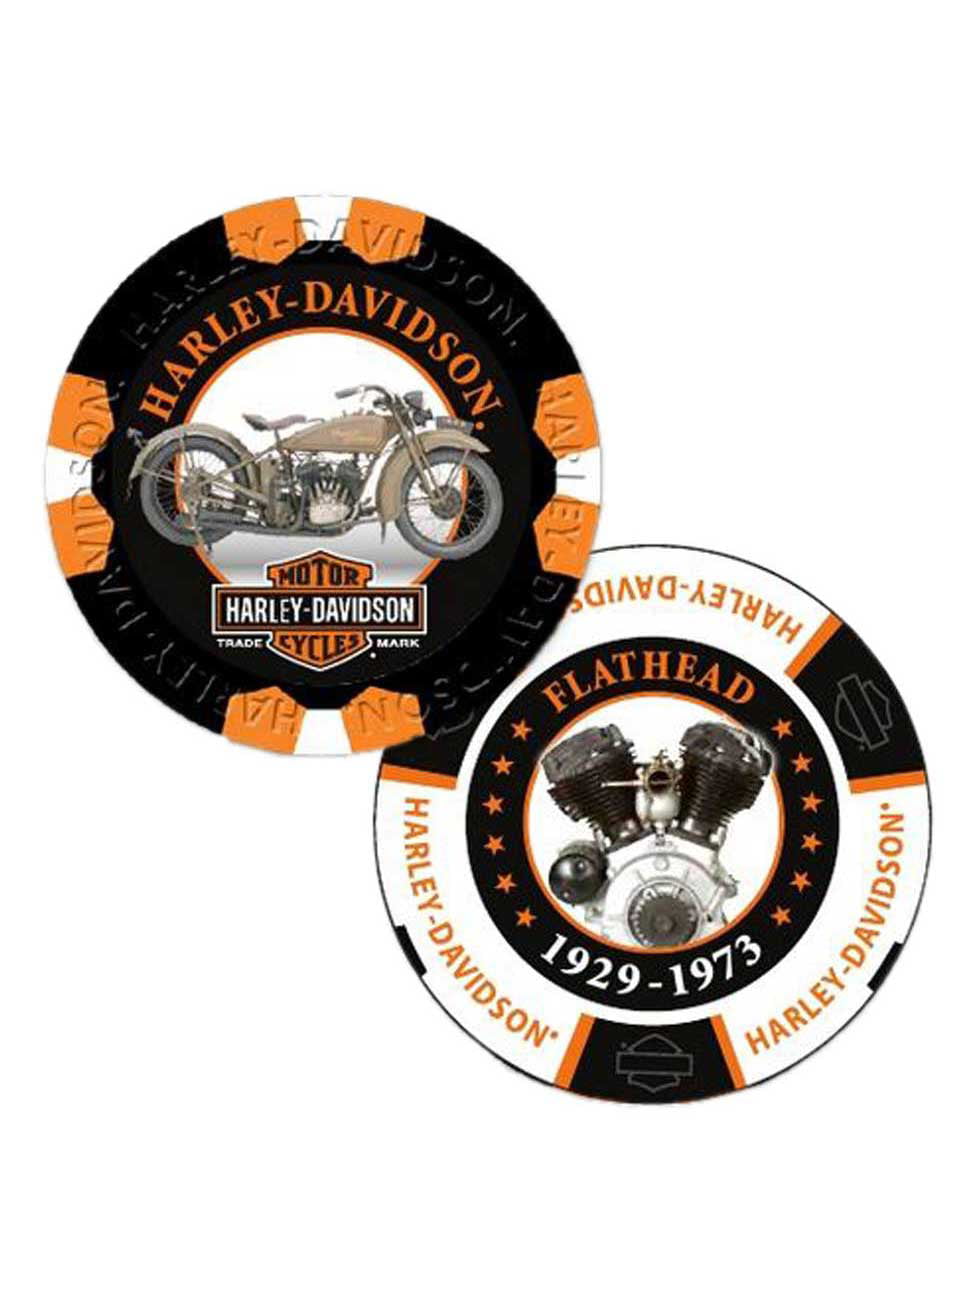 Harley Davidson Limited Edition Series 3 Poker Chips 2 Chips Included 6703d Harley Davidson Walmart Com